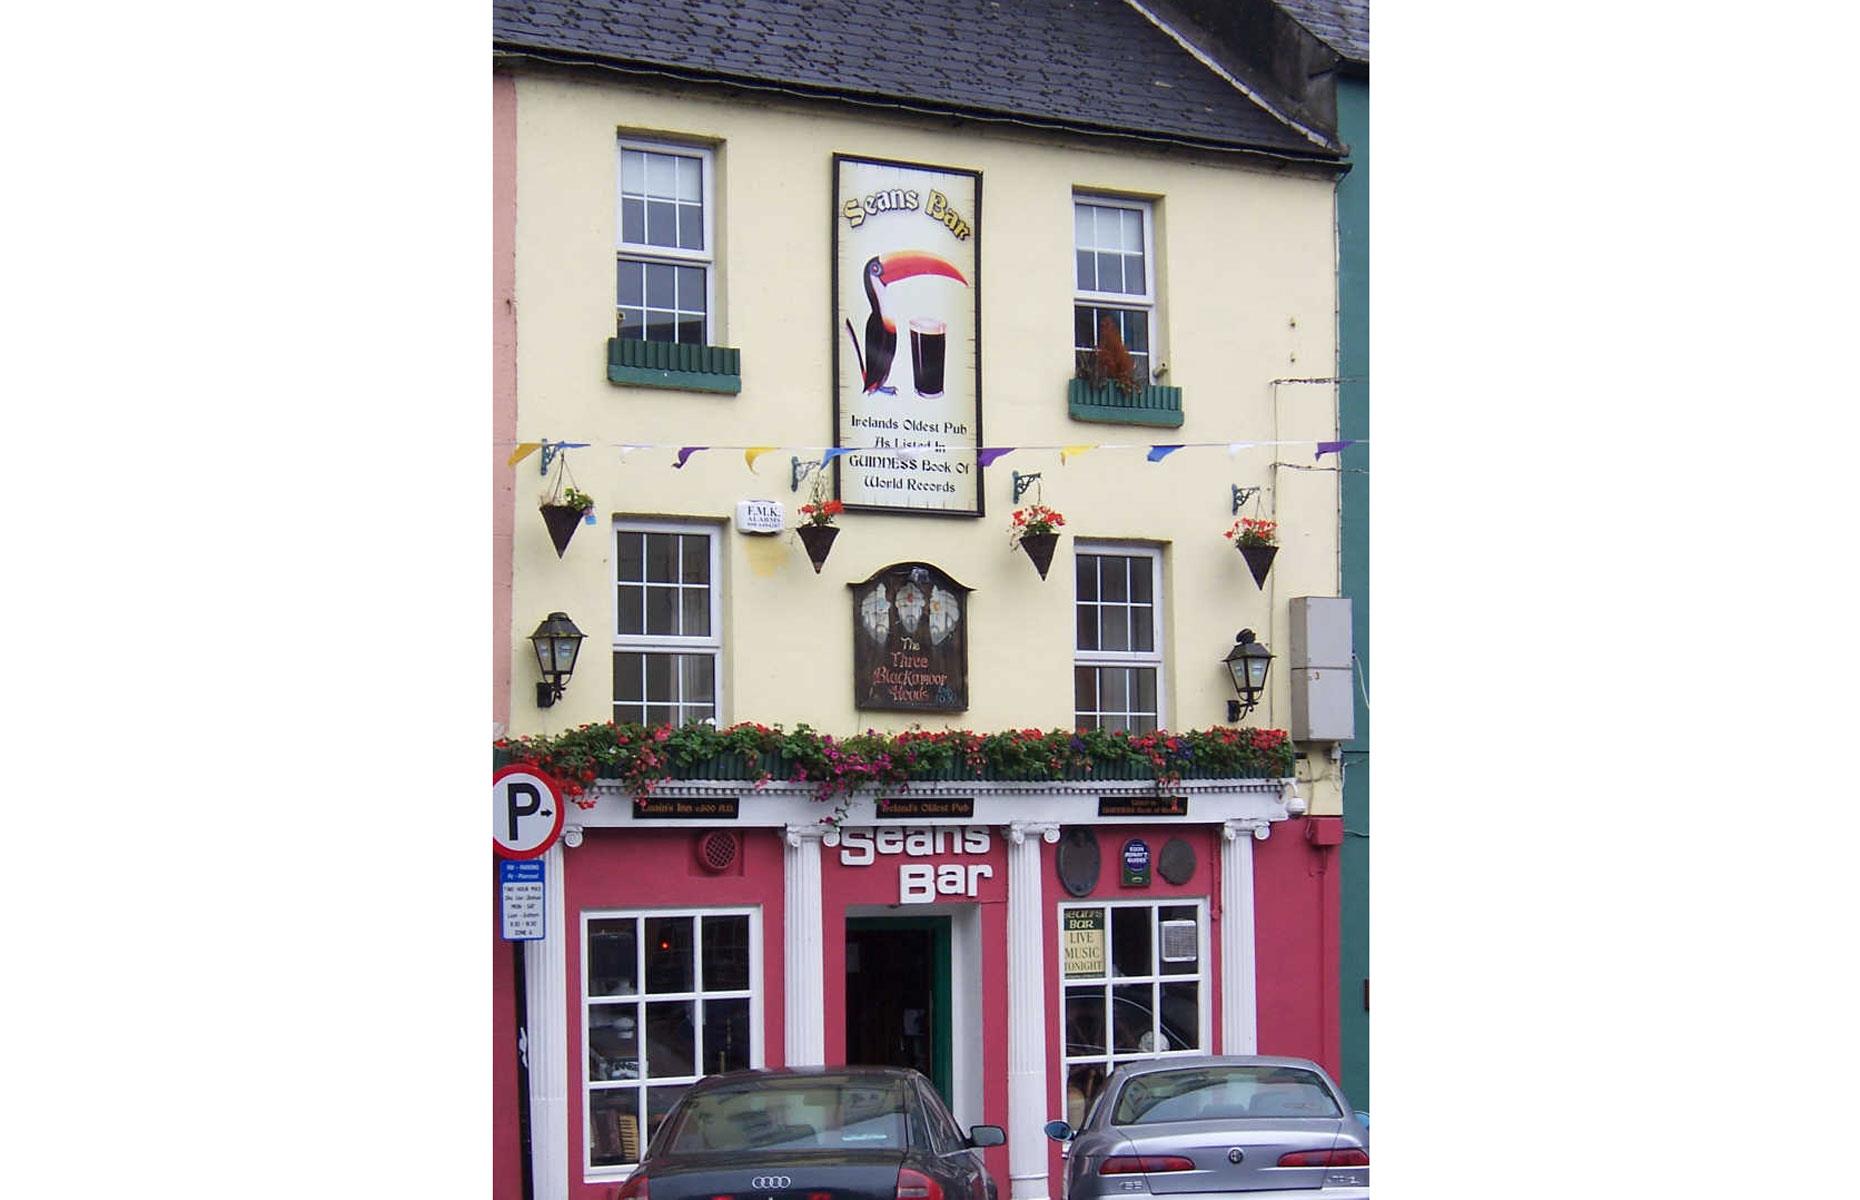 Sean's Bar, Ireland: est. 900